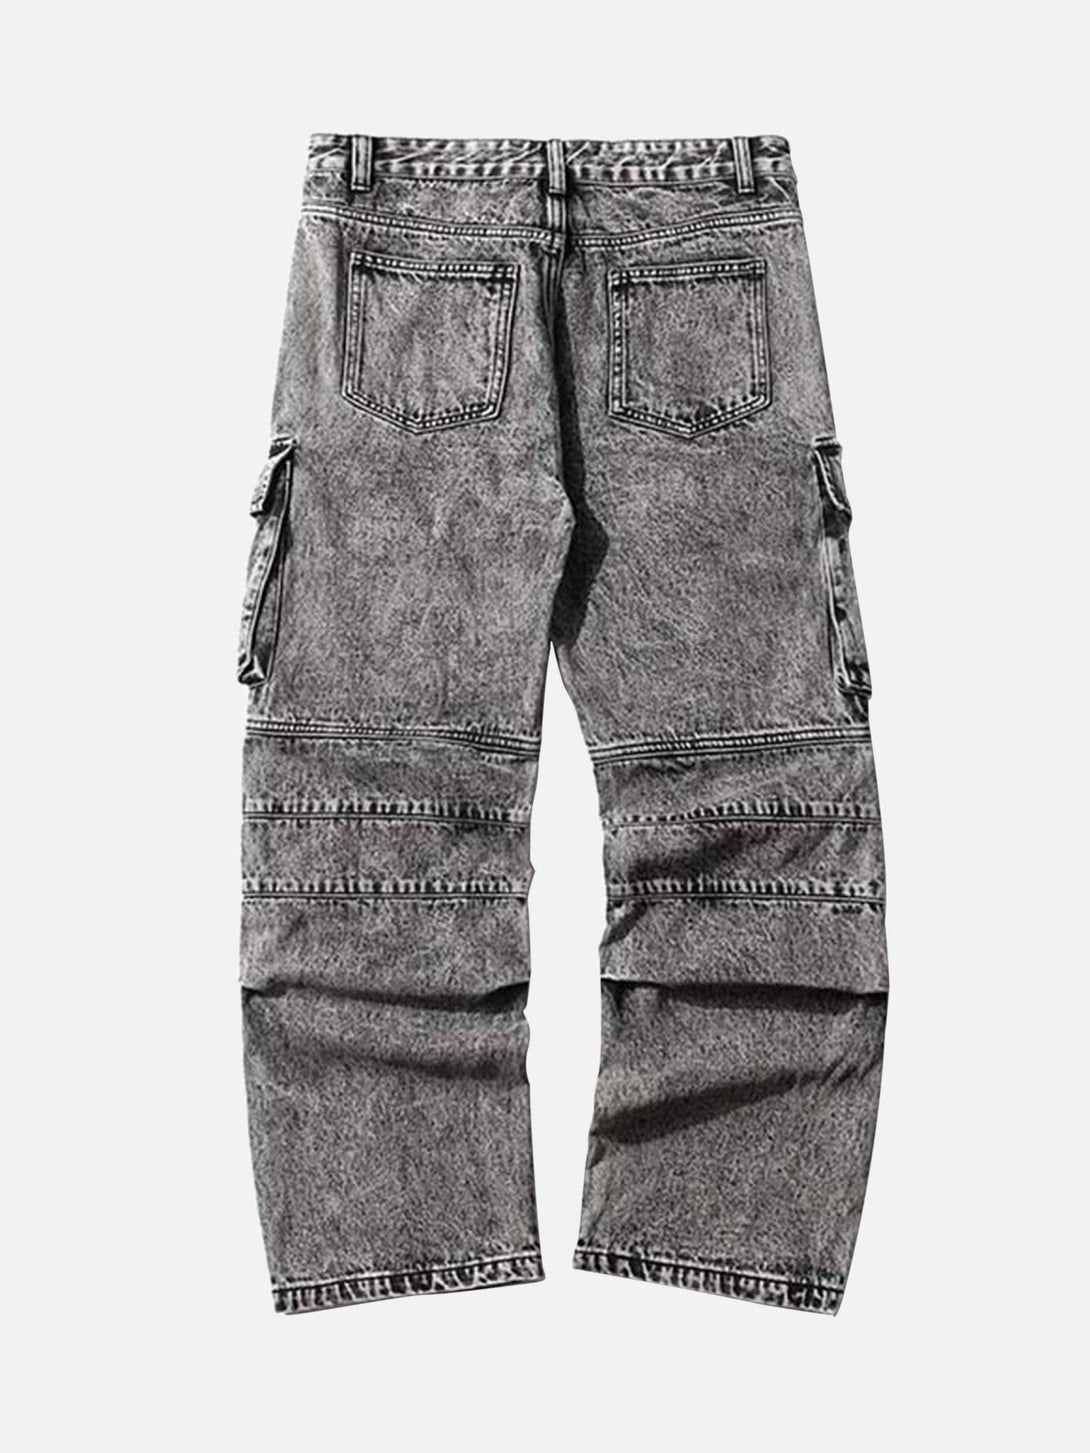 Majesda® - Washed And Distressed Multi-pocket Jeans - 1698- Outfit Ideas - Streetwear Fashion - majesda.com